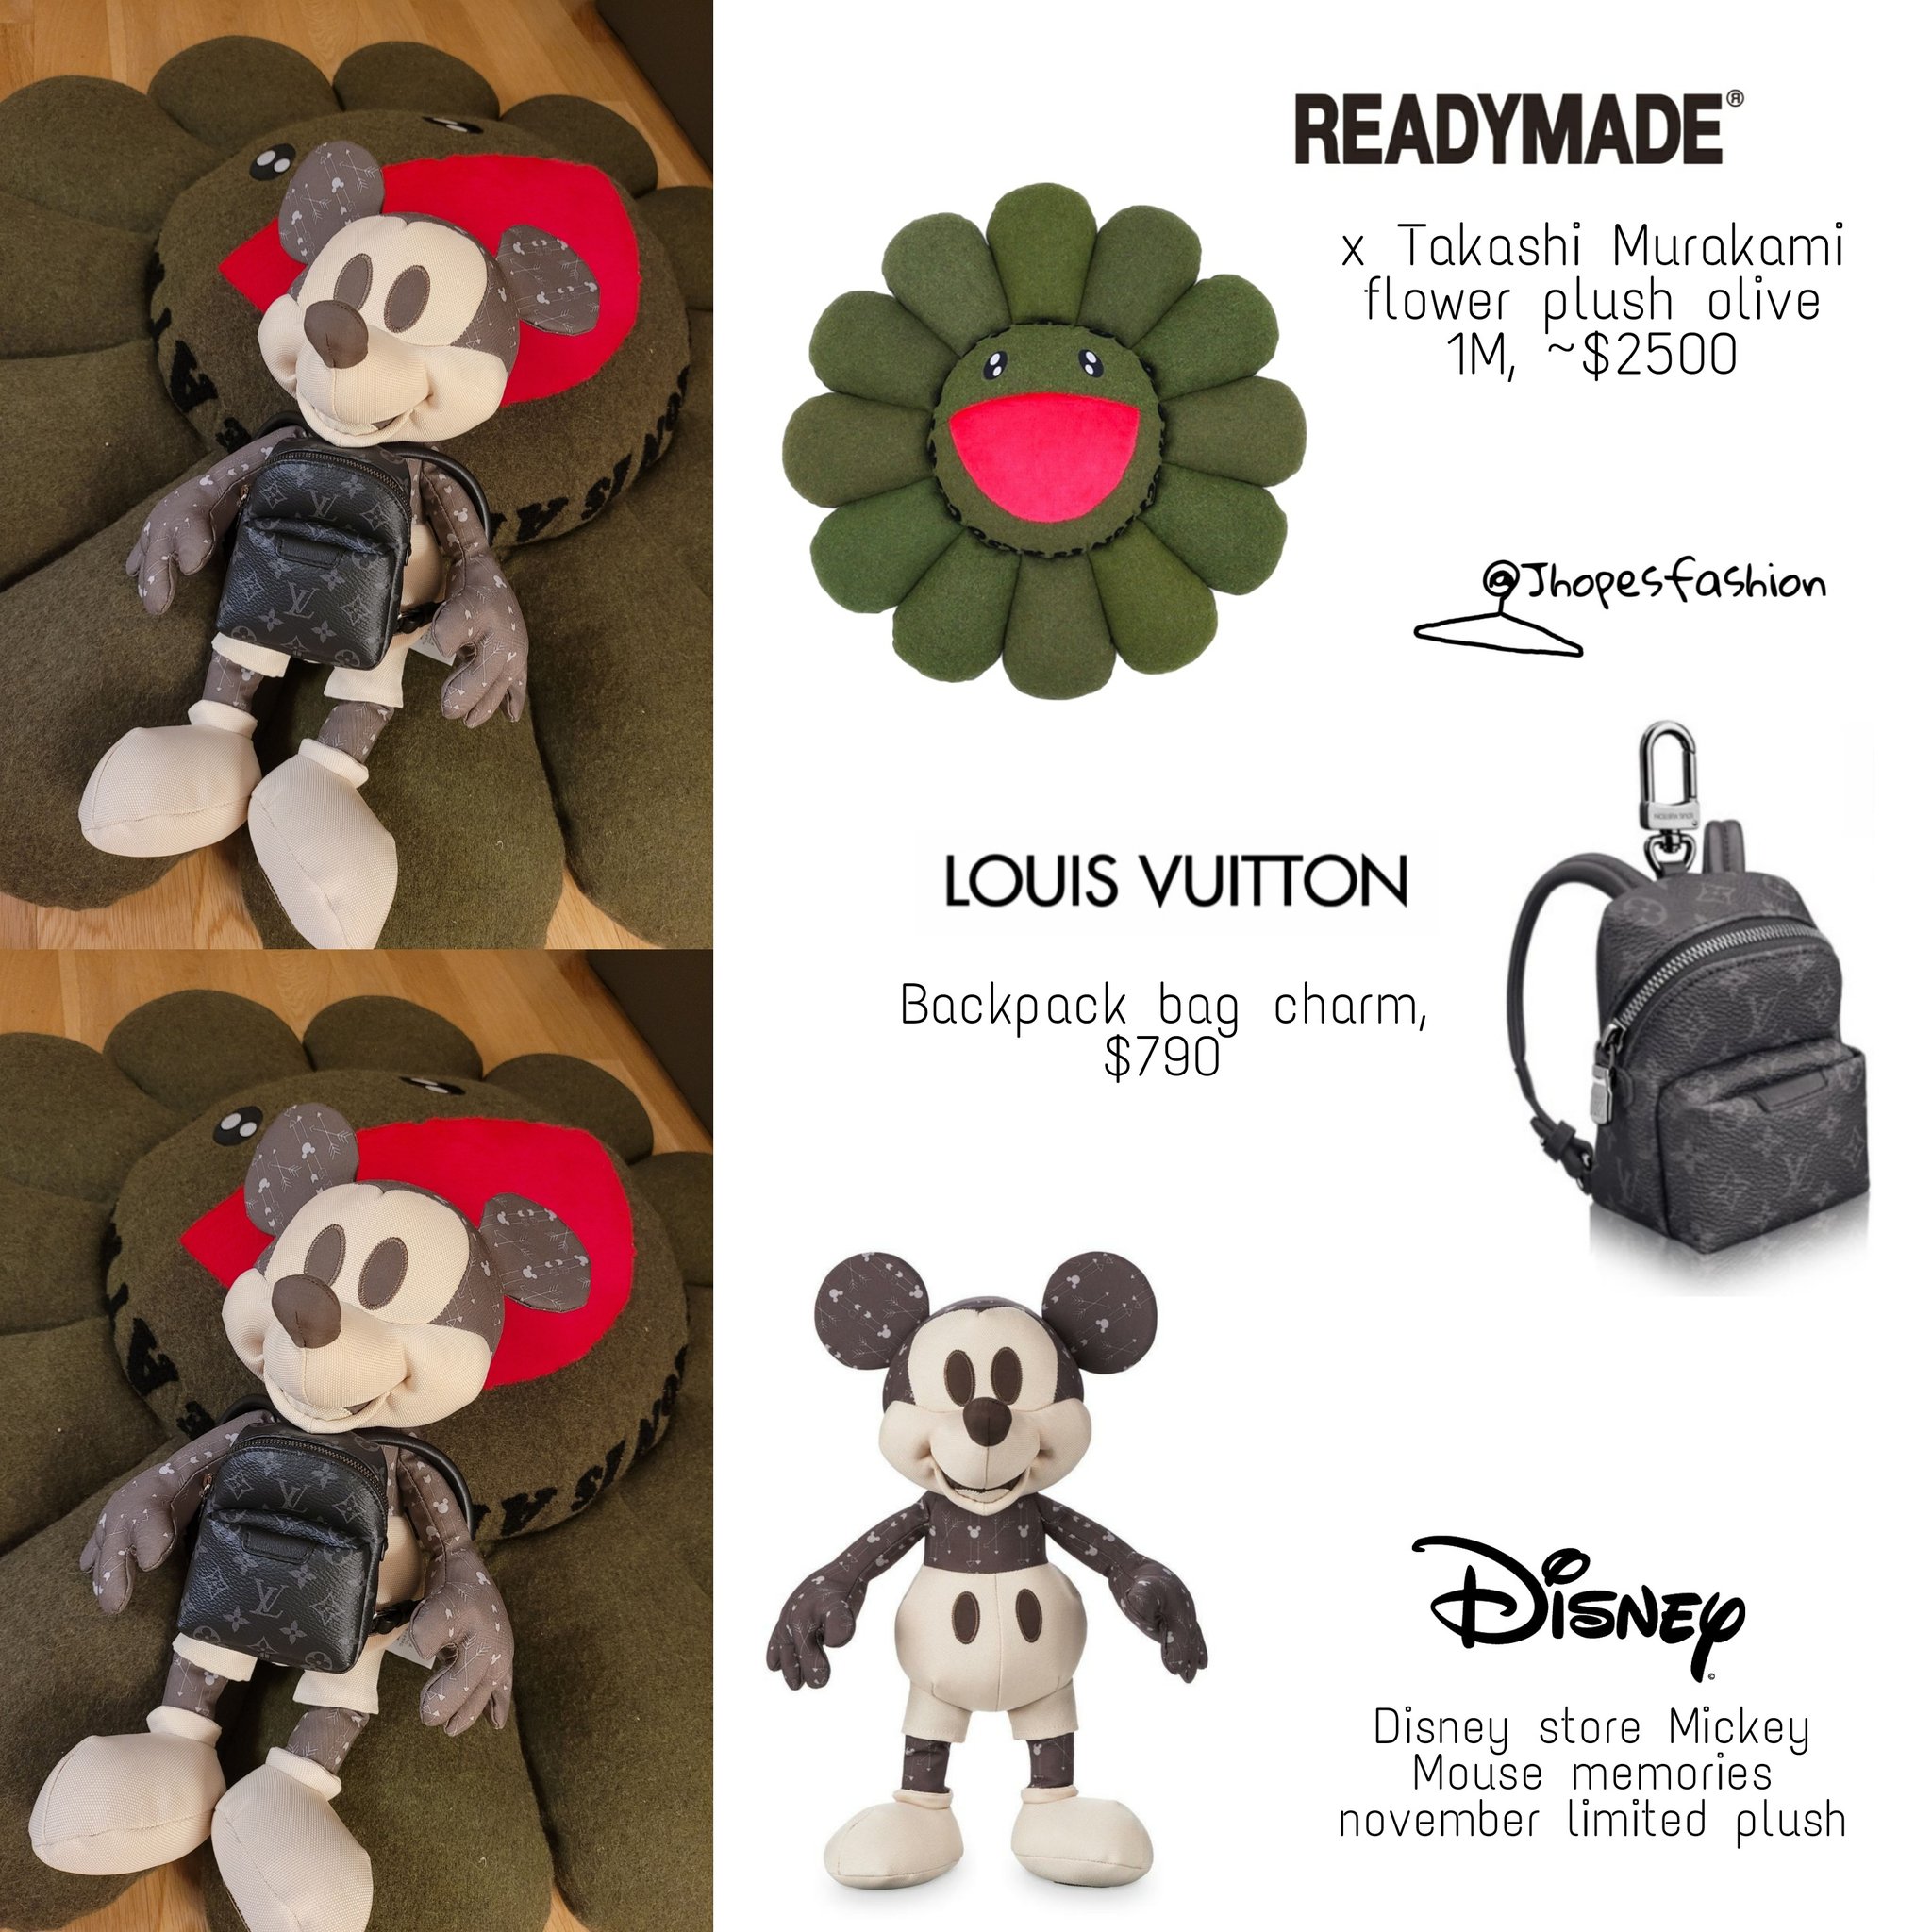 j-hope's closet (rest) on X: J-hope's Readymade x Takashi Murakami flower  plush, Louis Vuitton bag charm and Disney Mickey Mouse plush 201004 -  Weverse post #Jhope #제이홉 #Jhopefashion #BTS  / X